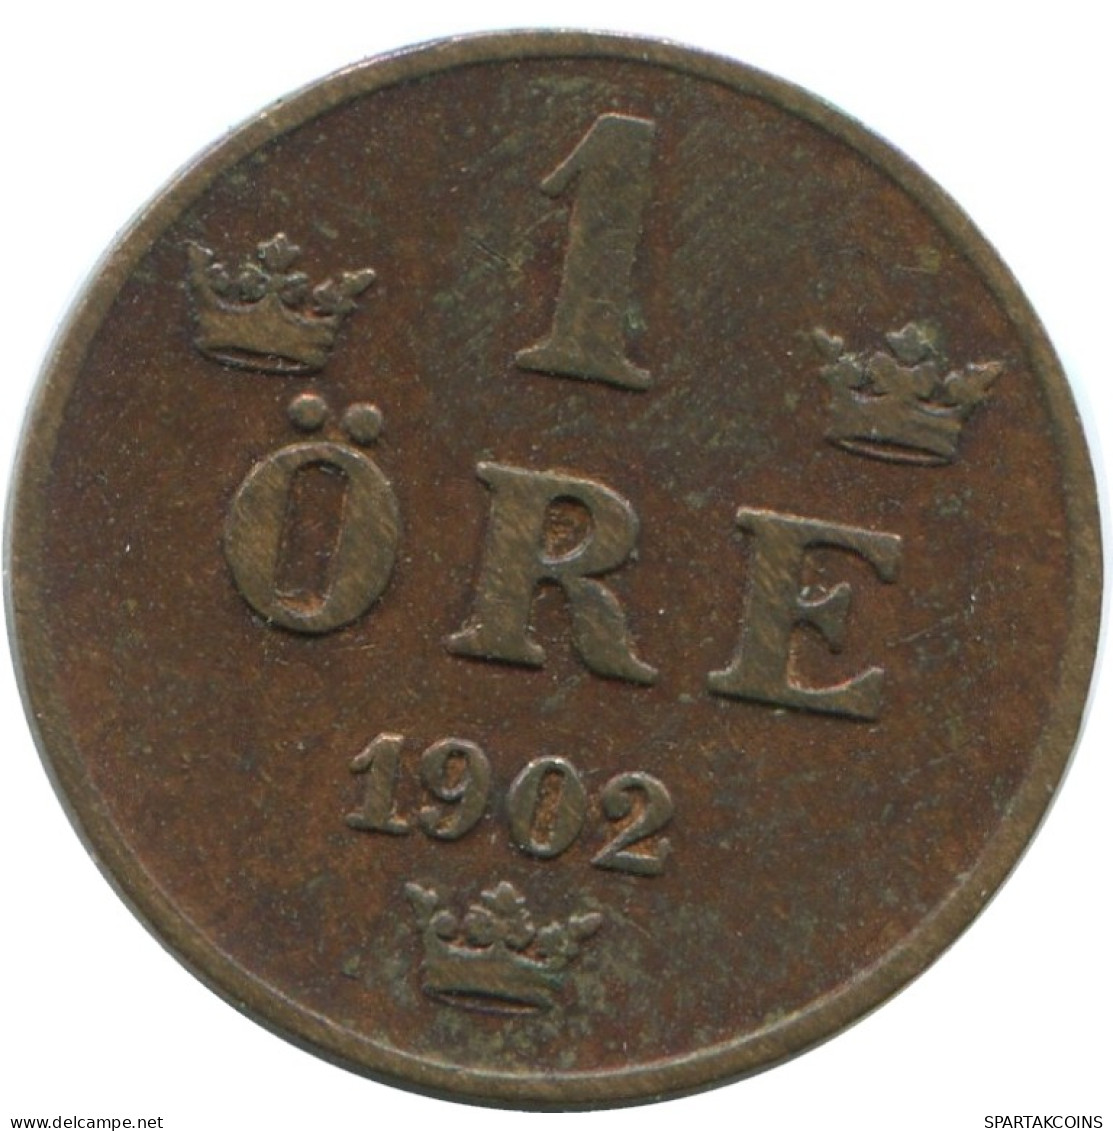 1 ORE 1902 SWEDEN Coin #AD281.2.U.A - Schweden